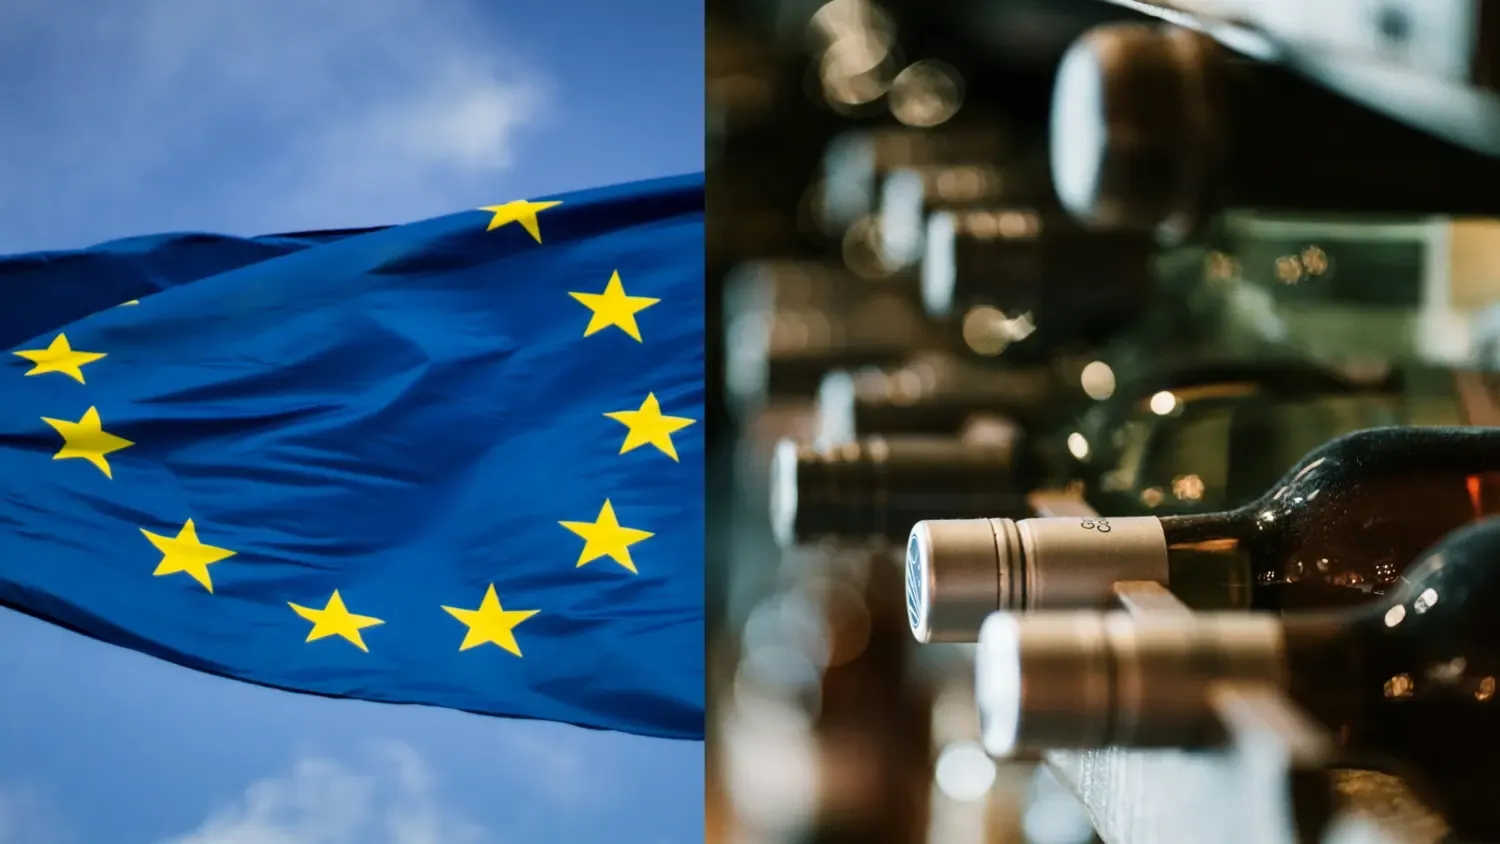 EU flag and winebottles